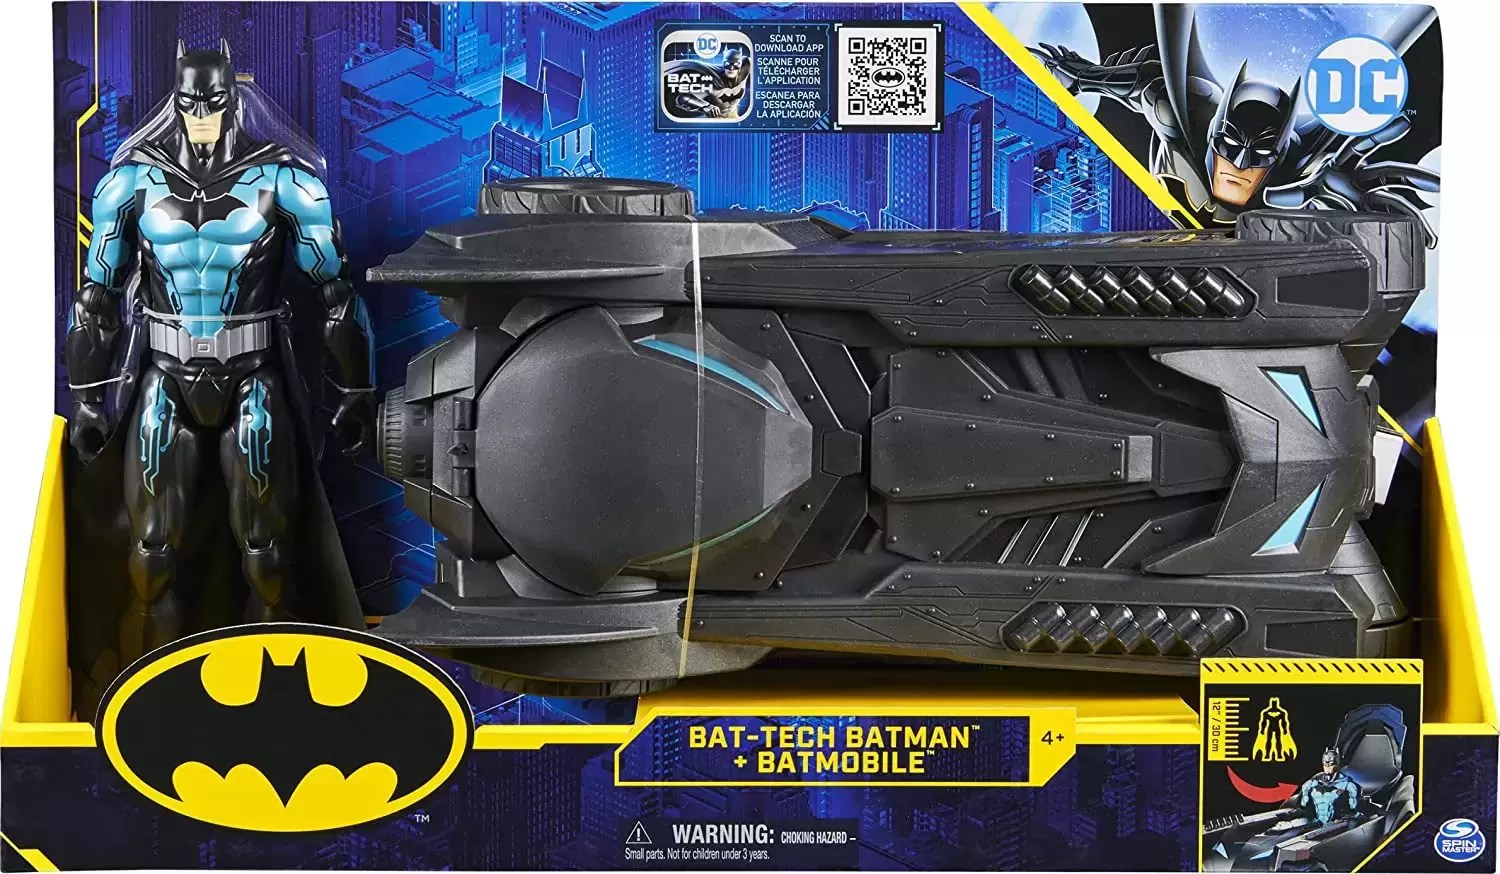 Bat-Tech Batman & Batmobile - figurine DC by Spin Master